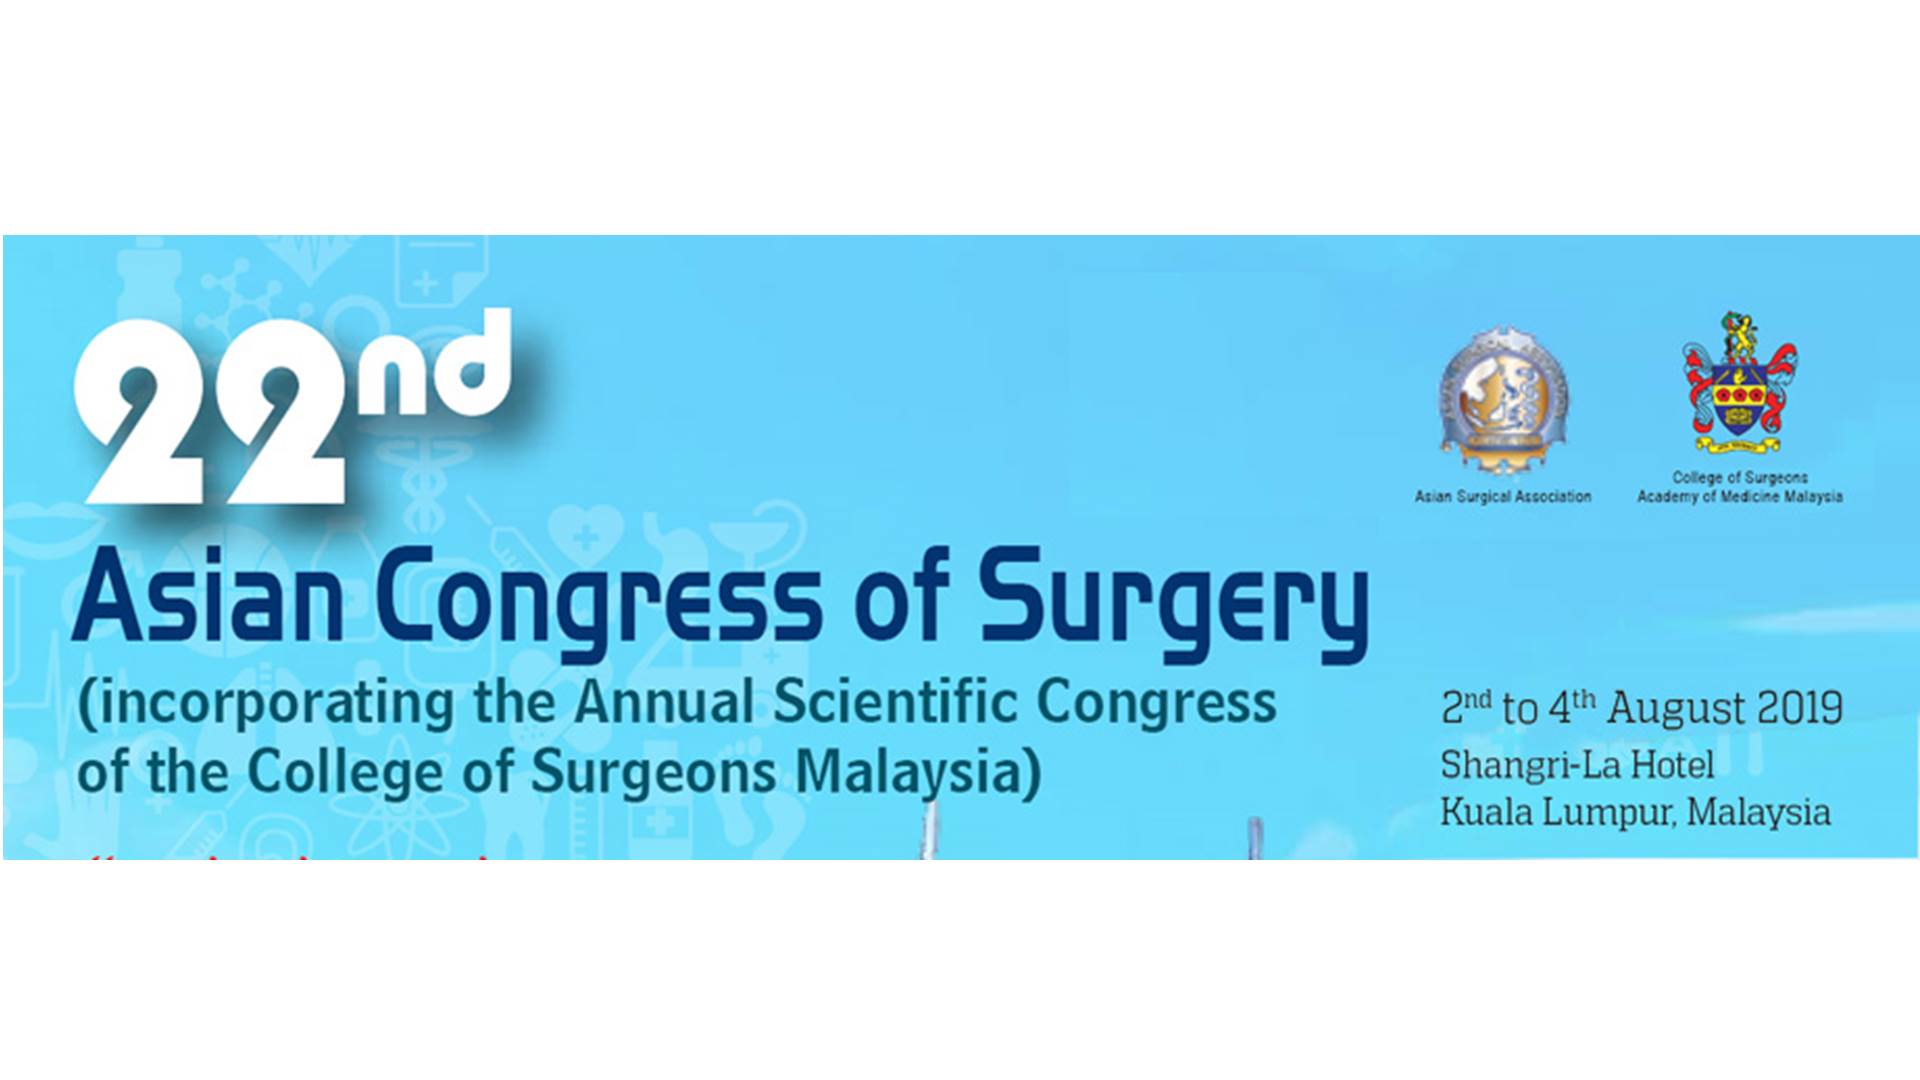 The 22nd Asian Congress of Surgery